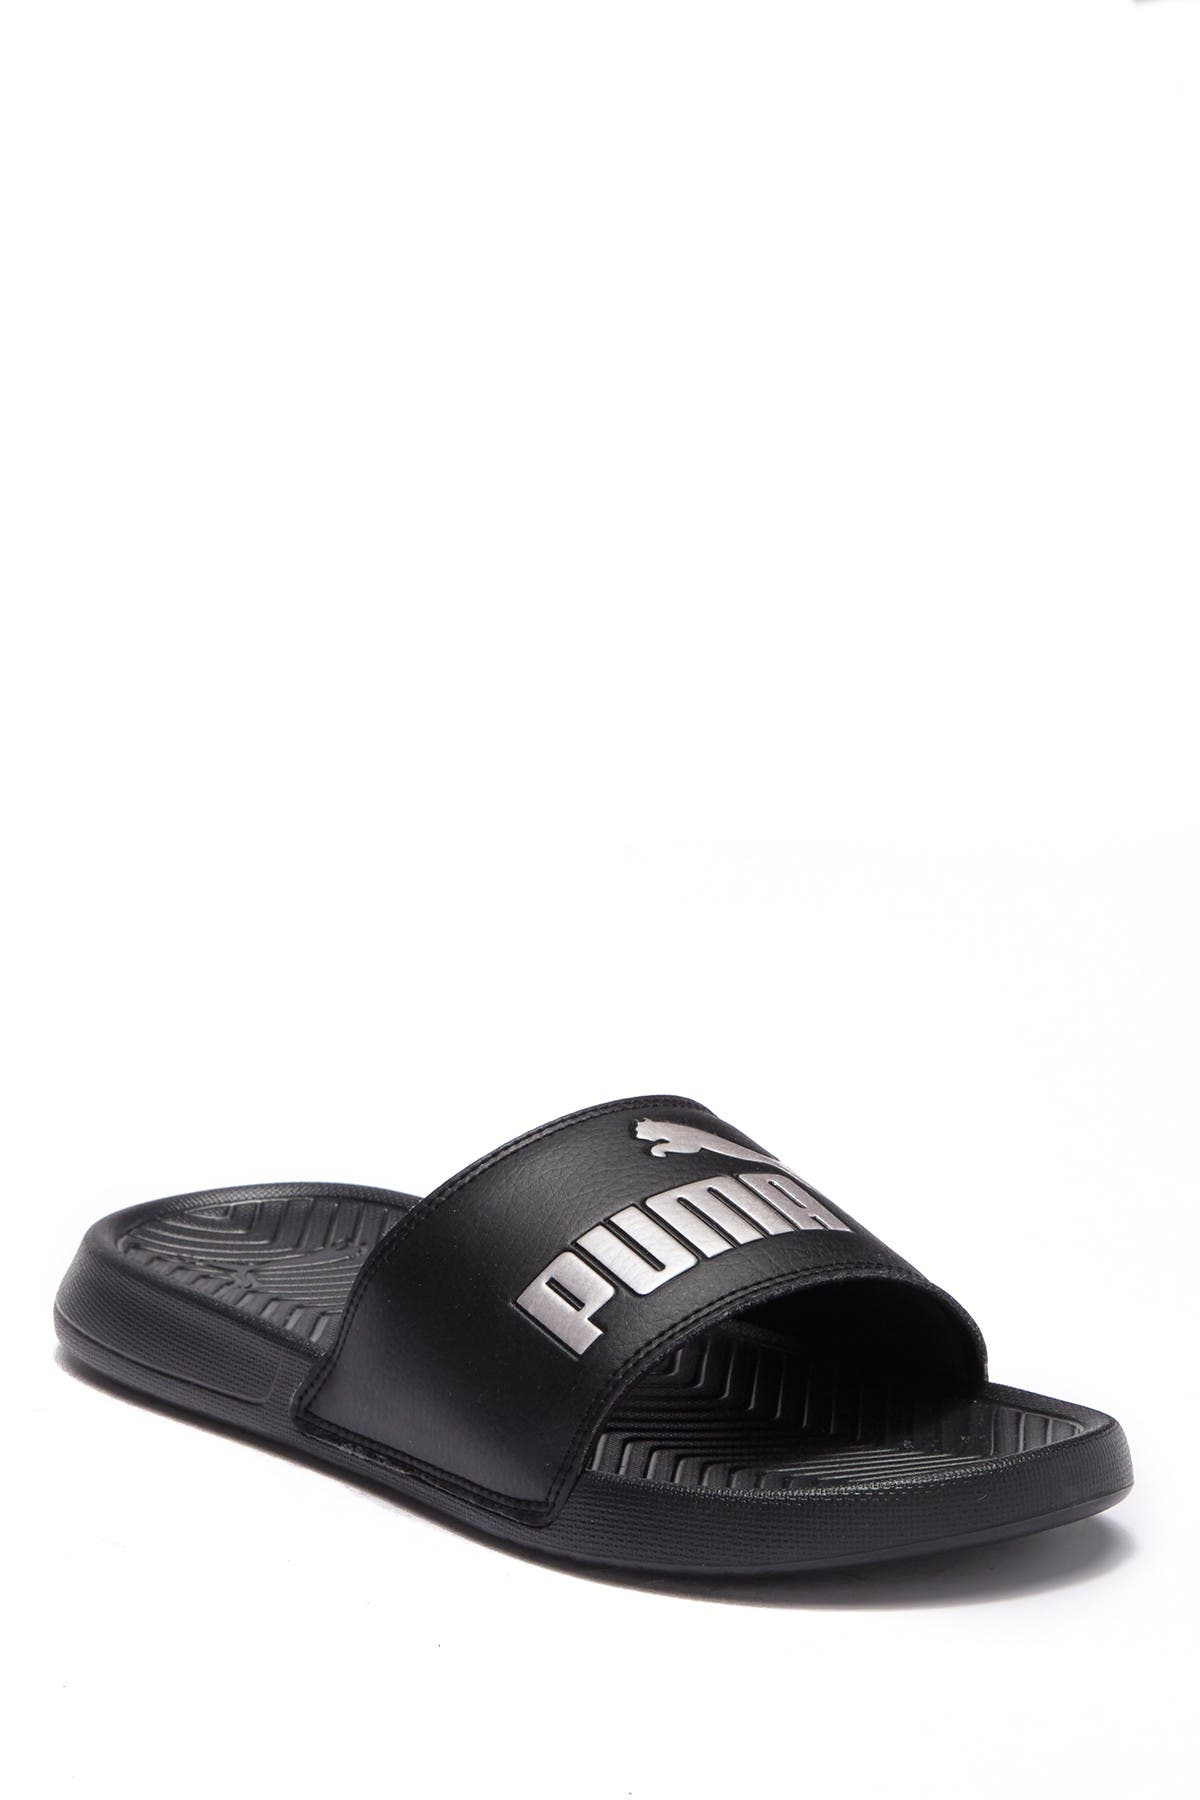 puma popcat slide sandals